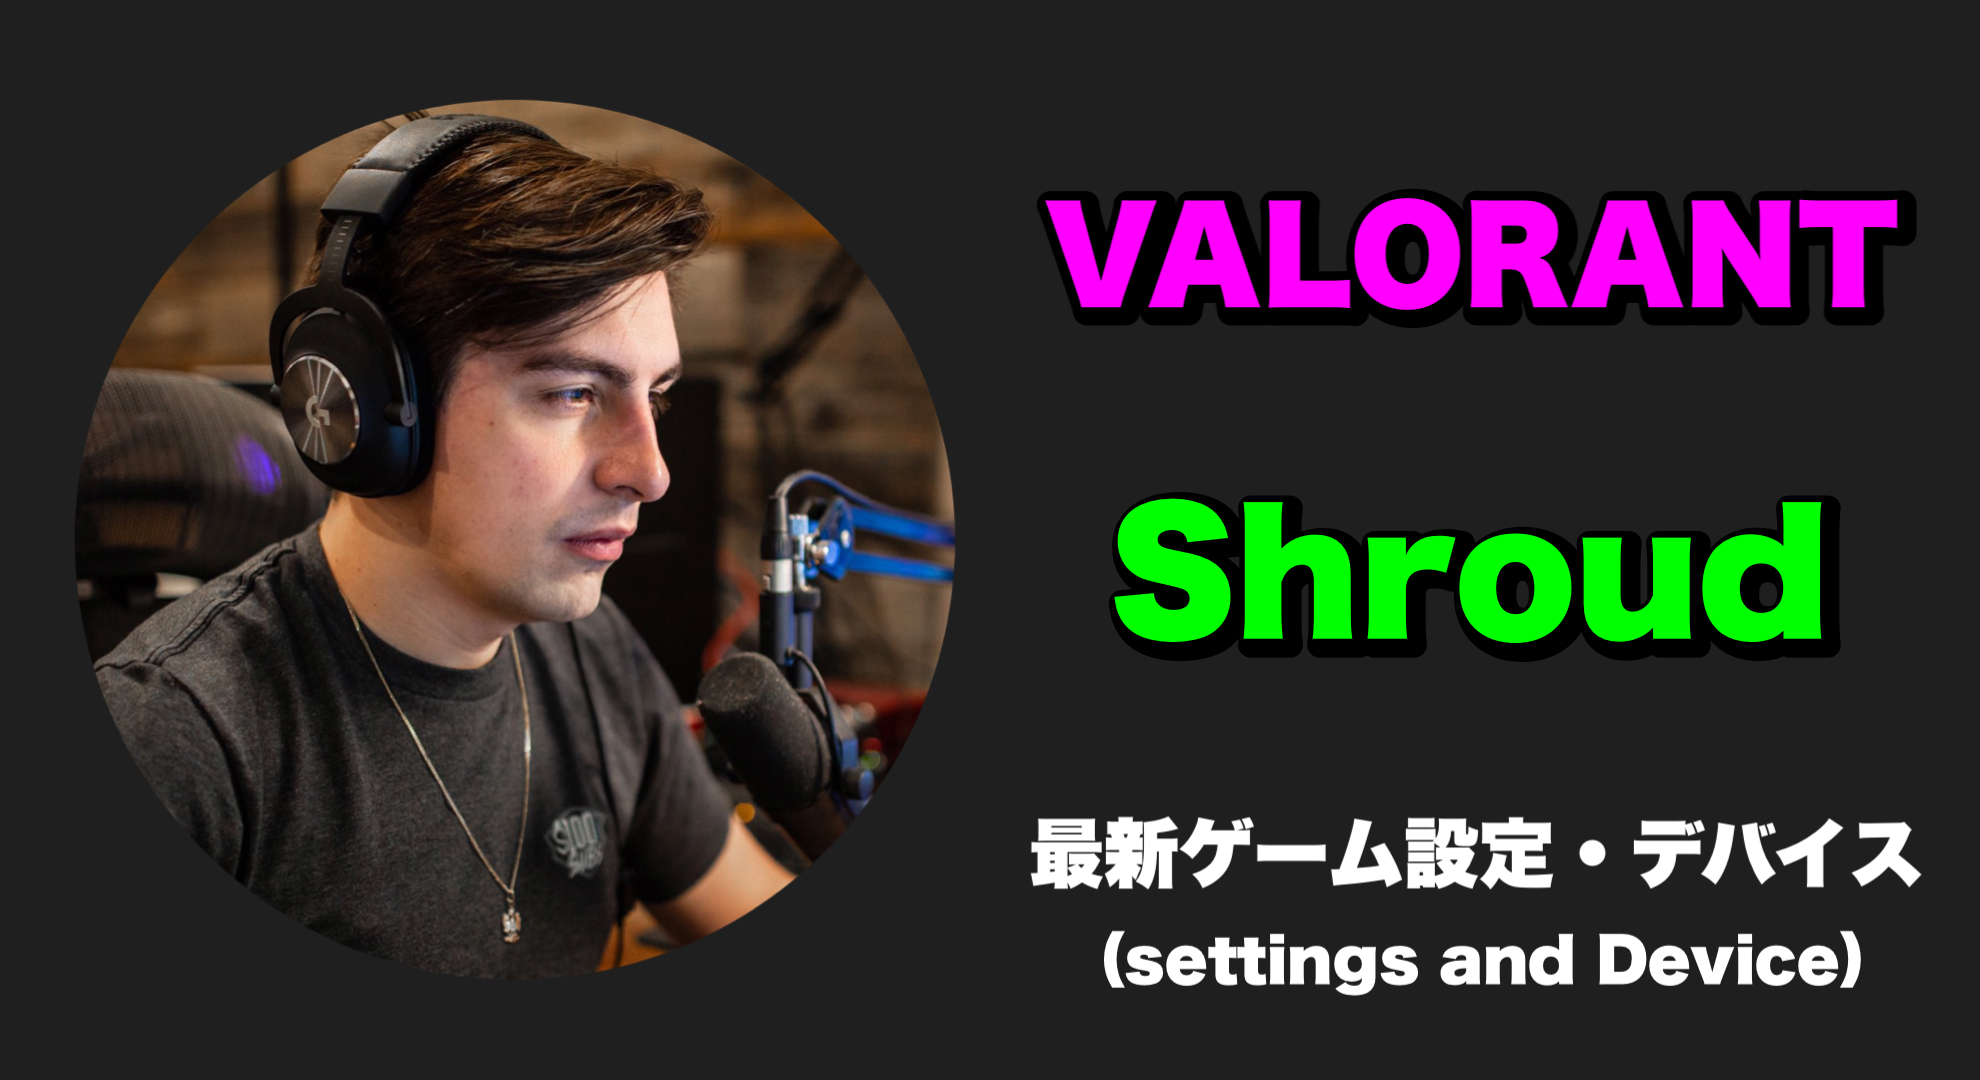 【VALORANT】Shroud(シュラウド)選手の感度・設定・キー配置・クロスヘア・使用デバイス (モニター・マウス・マウスパッド・キーボード・ヘッドセット)をご紹介 Shroud sens Shroud settings Shroud crosshair Shroud device